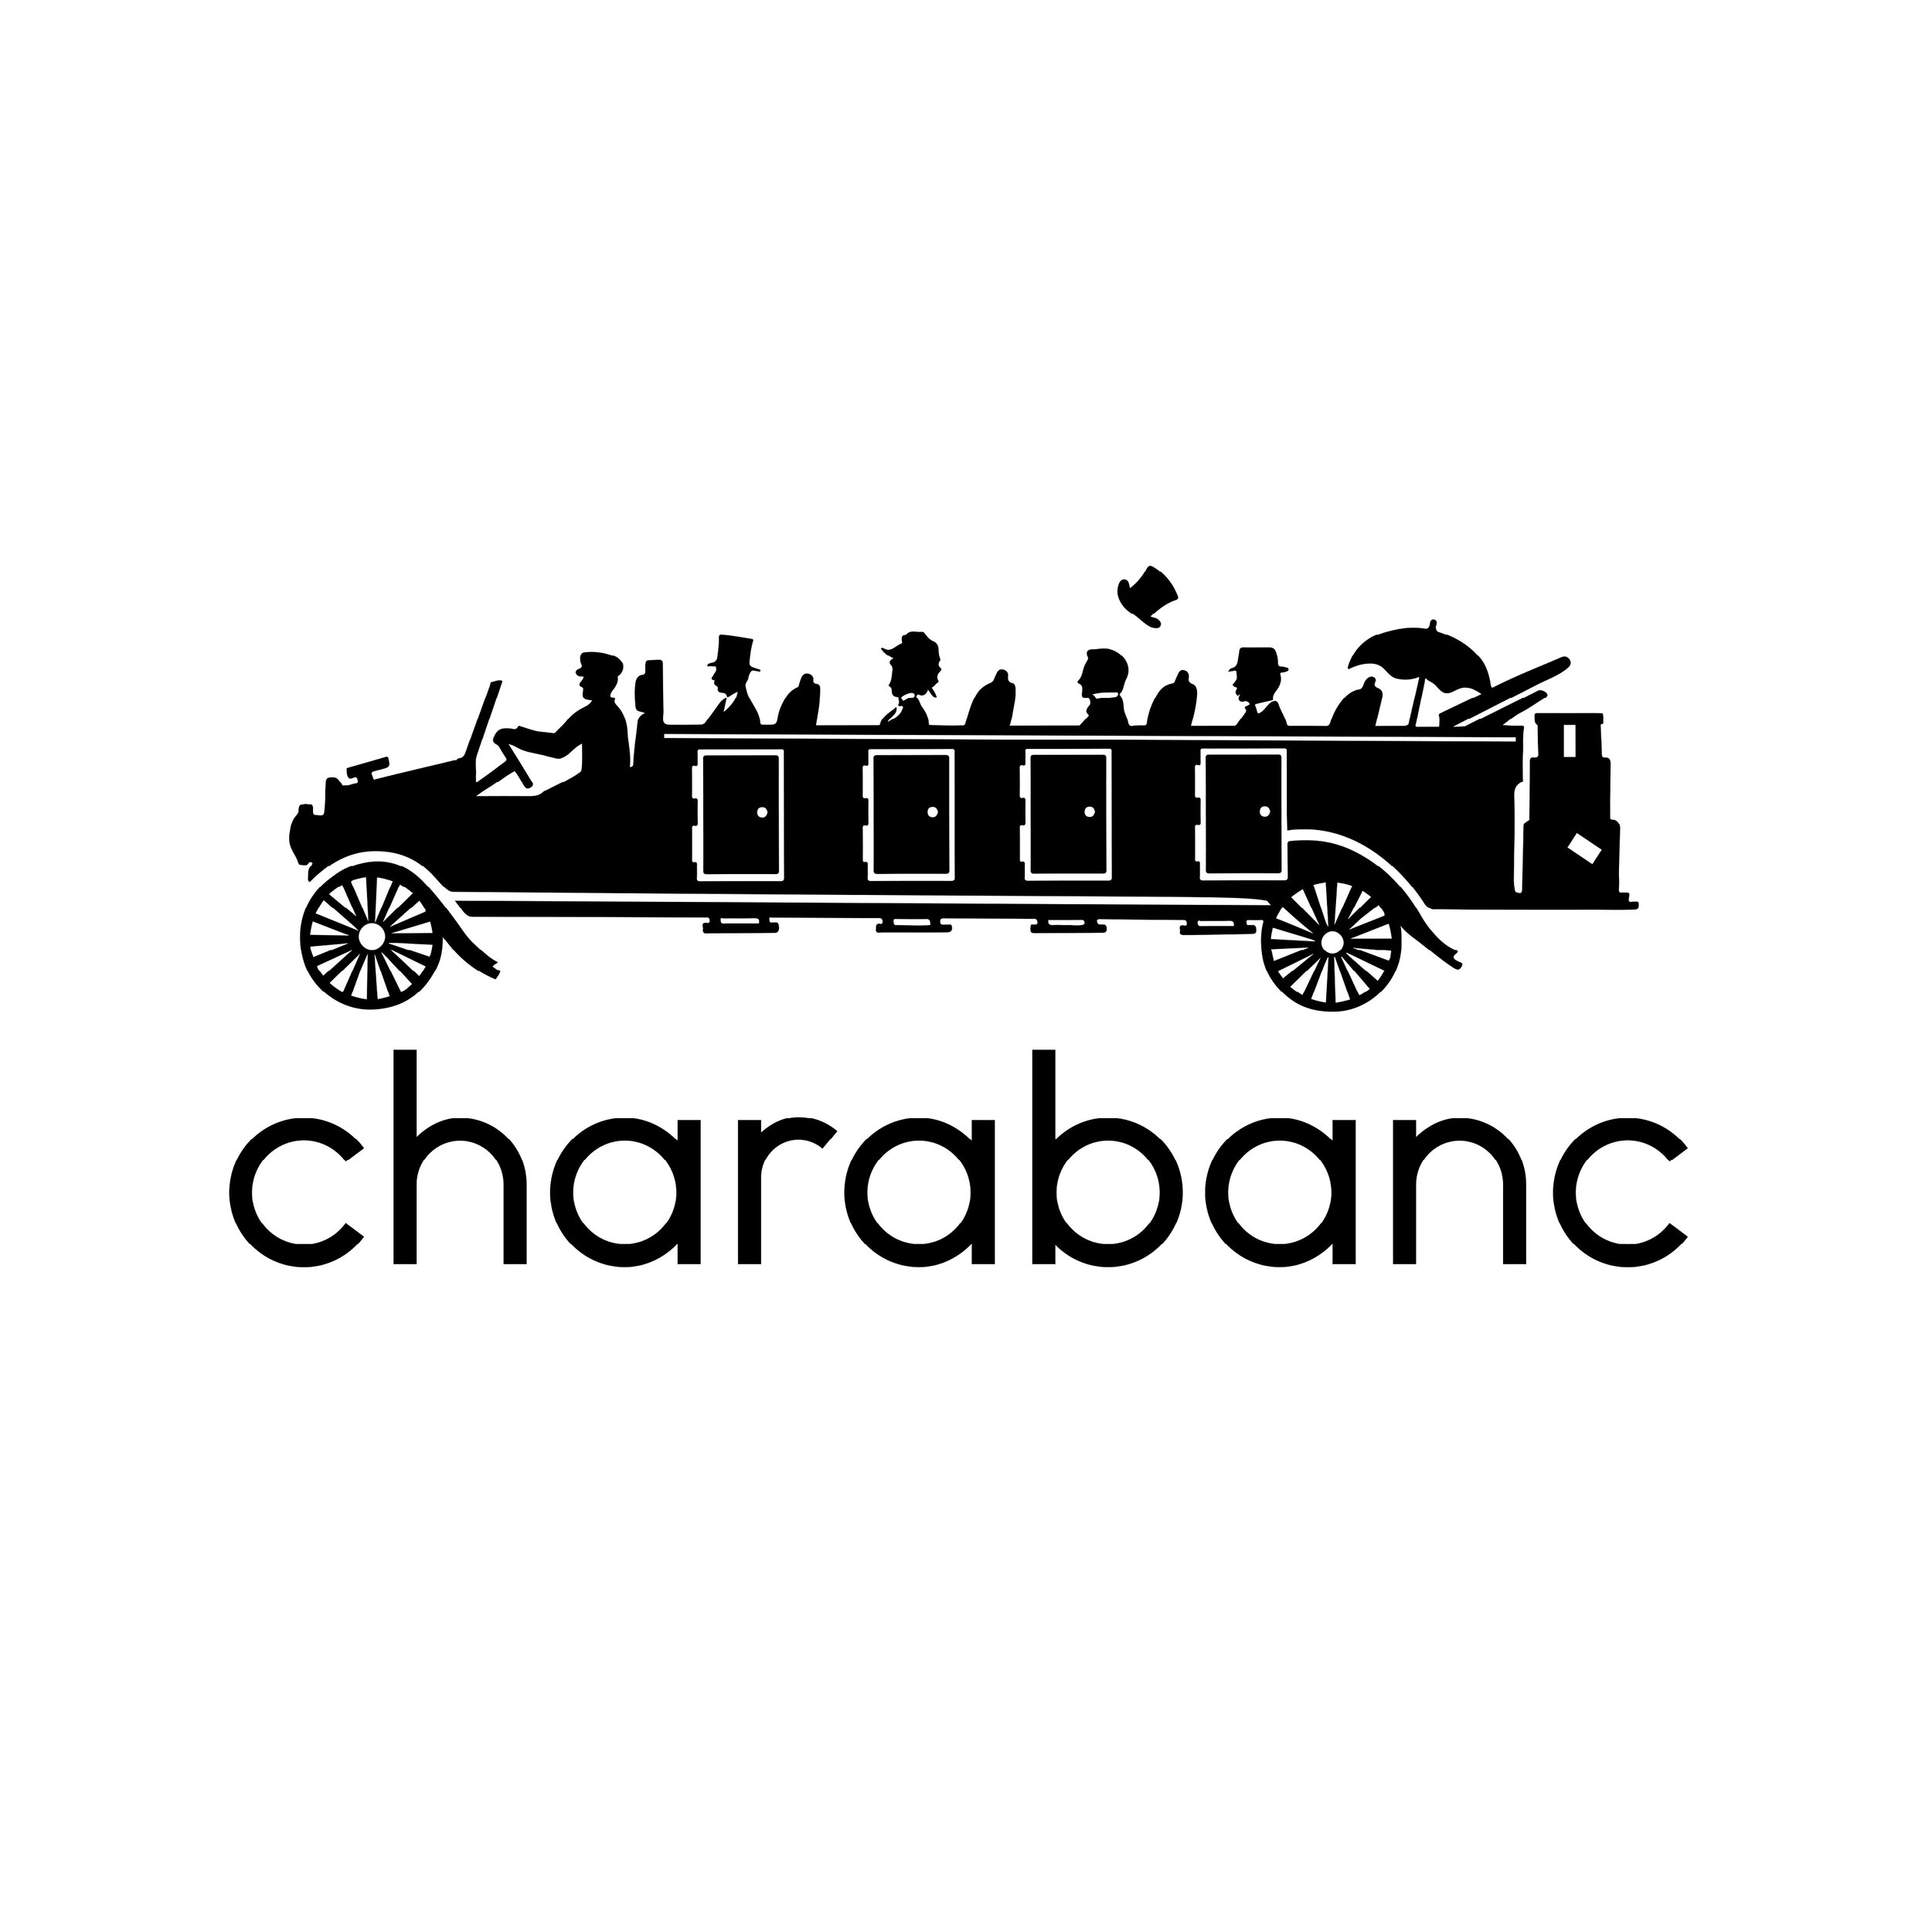 Charablanc